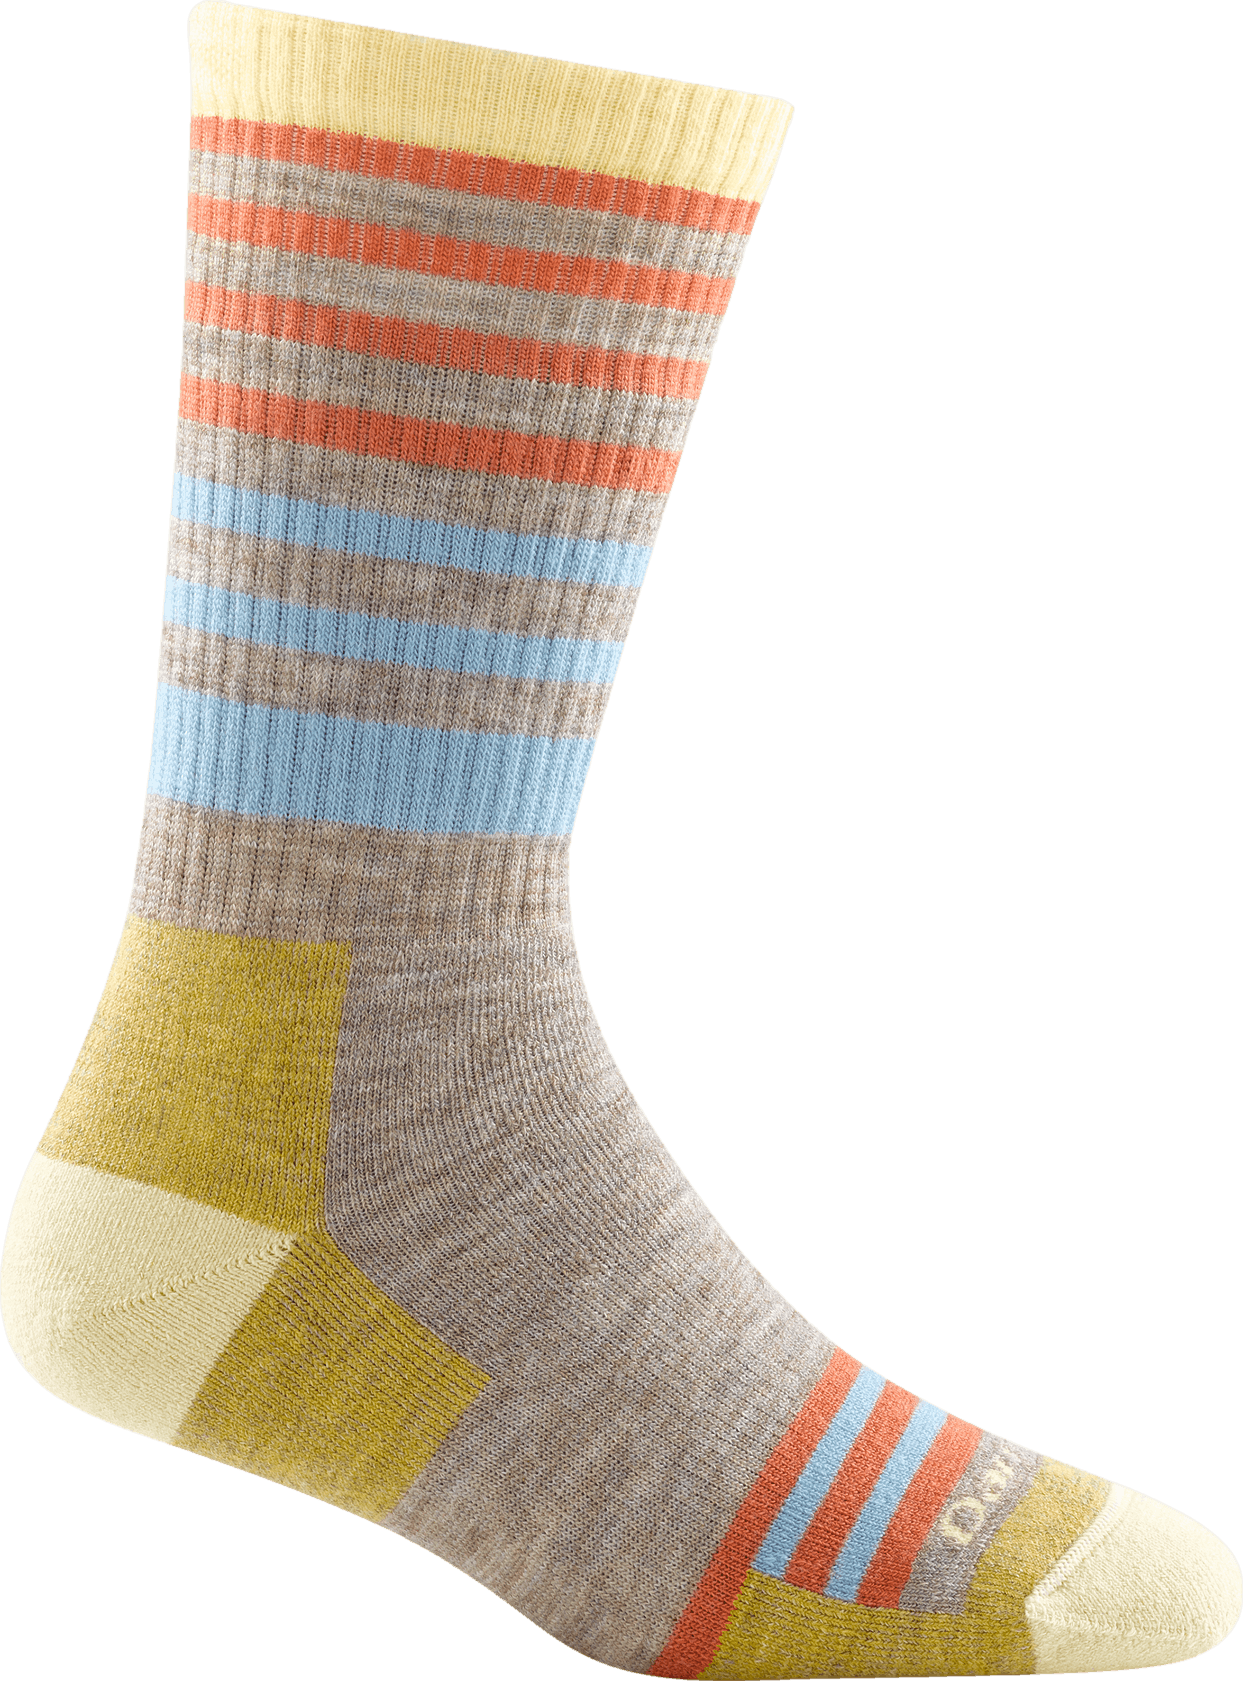 Darn Tough Women's Gatewood Boot Midweight Hiking Socks with Full Cushion